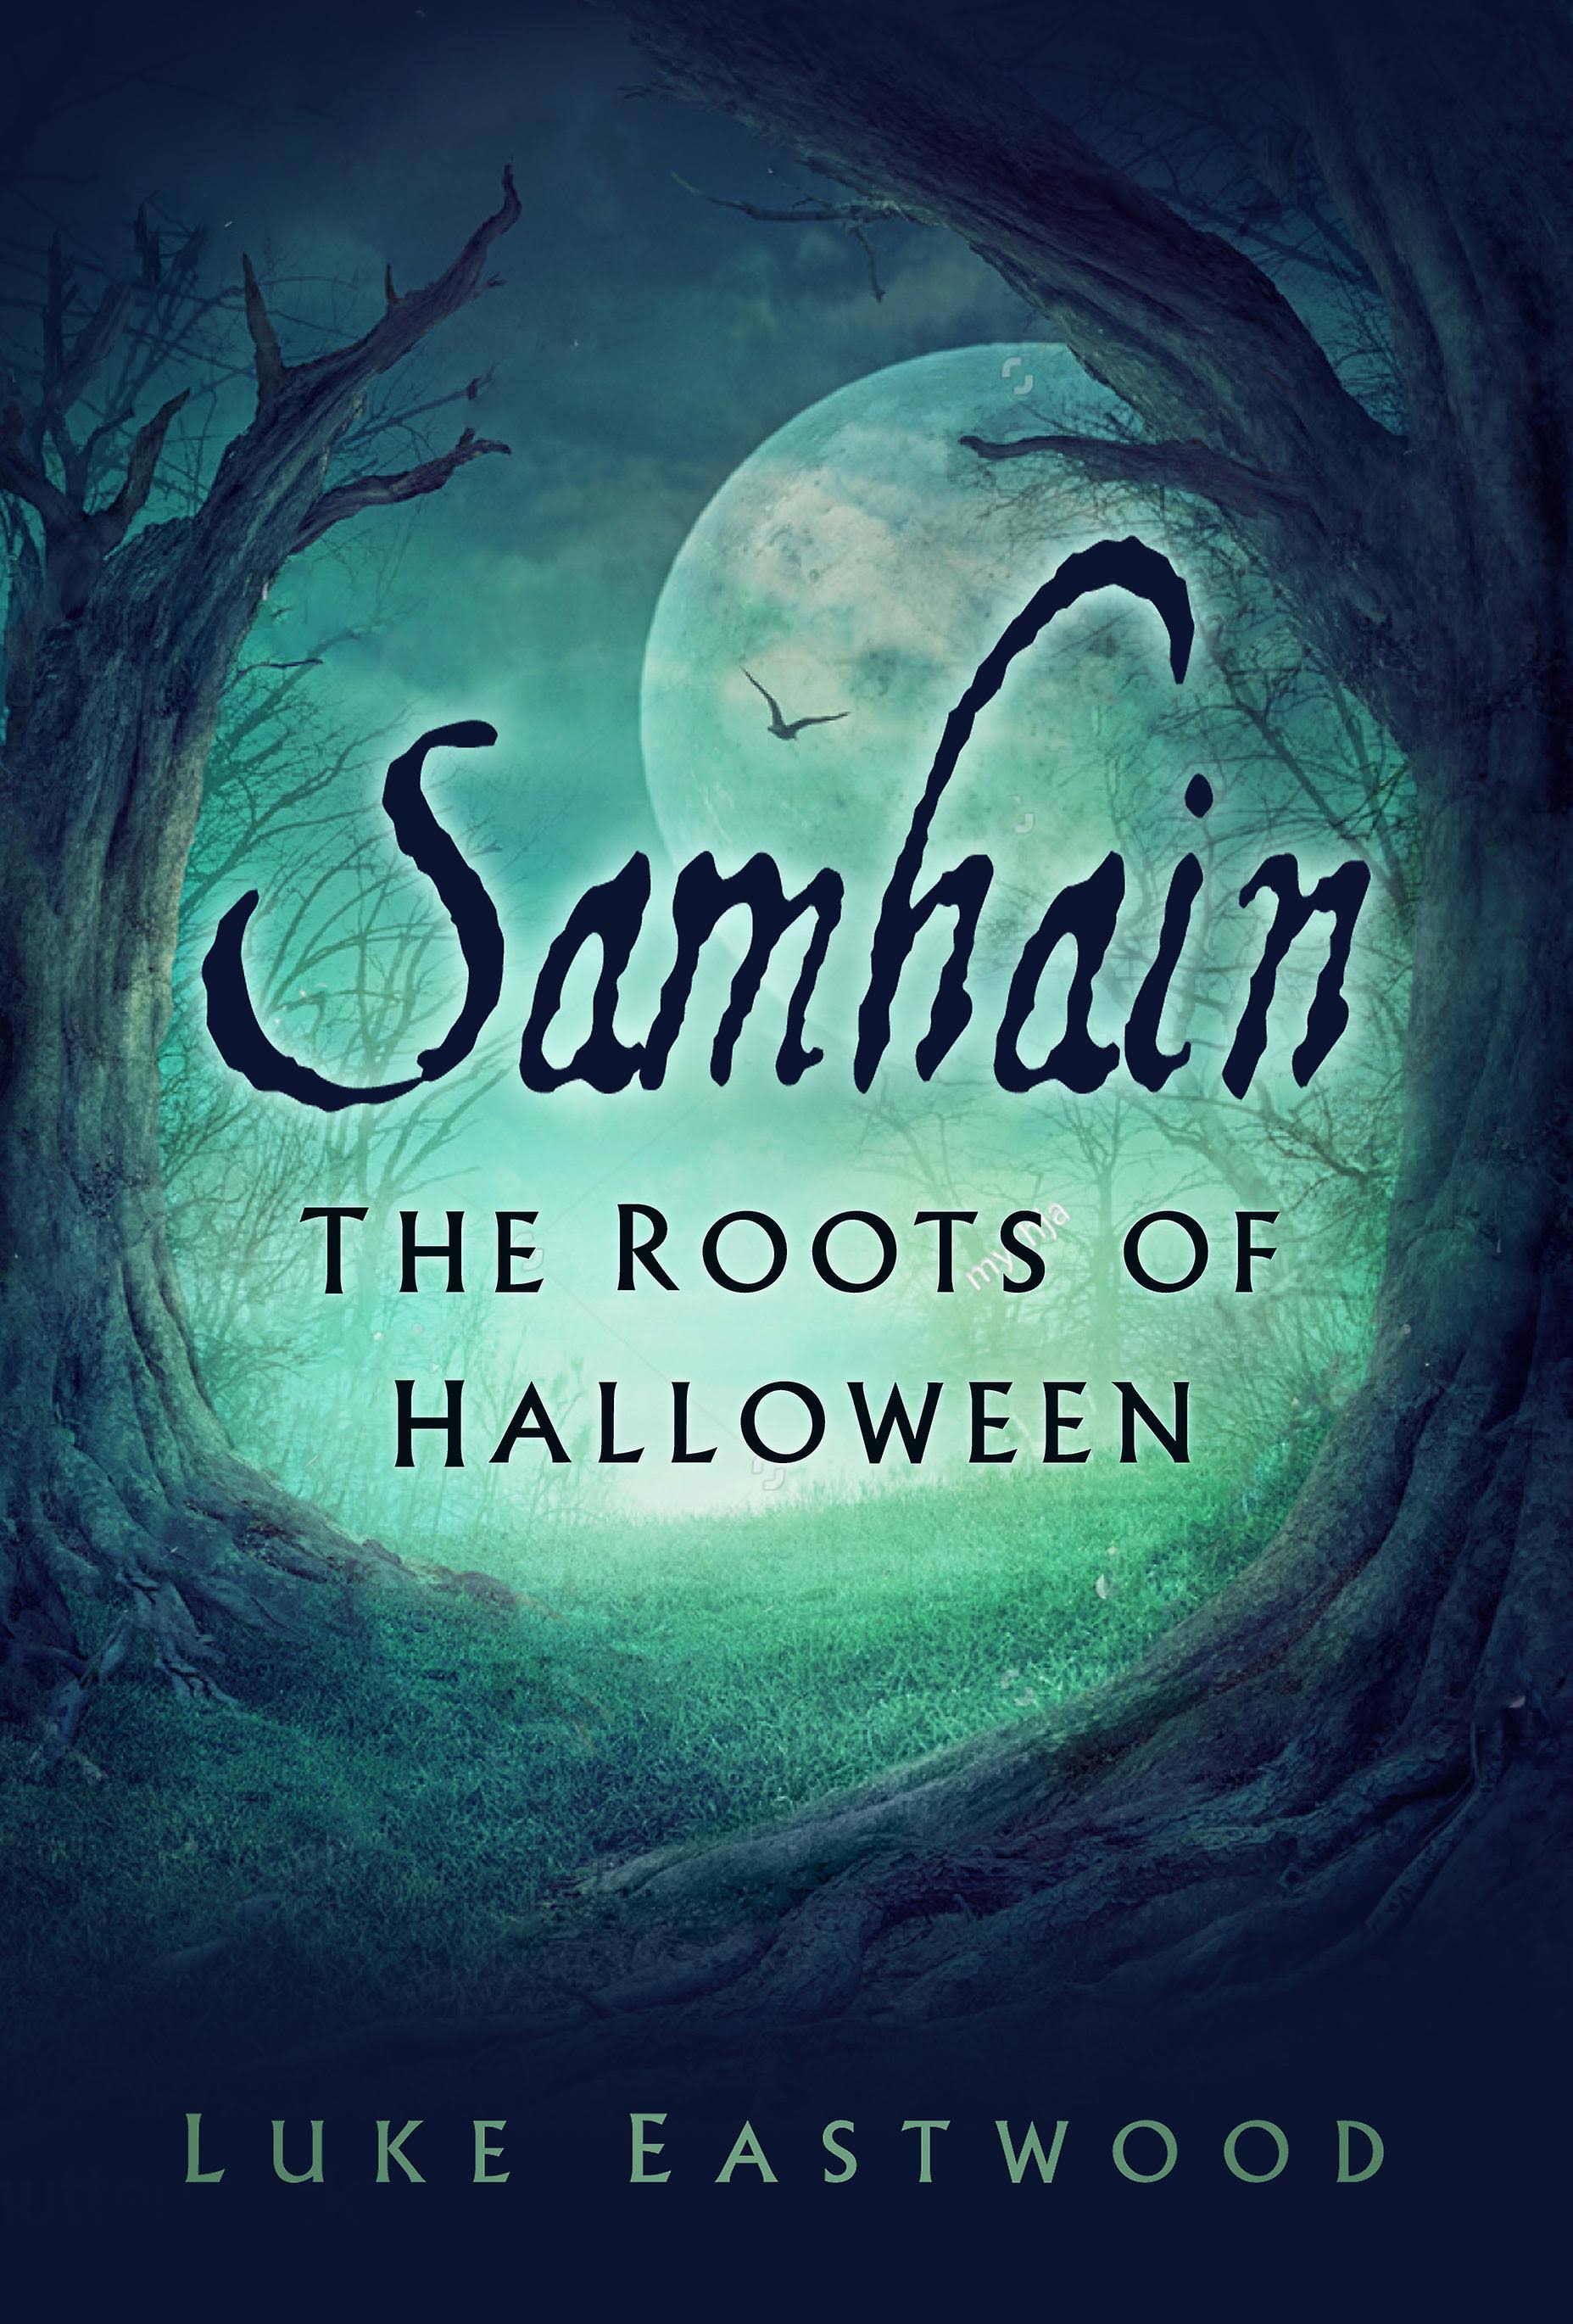 Samhain: The Roots of Halloween [Book]